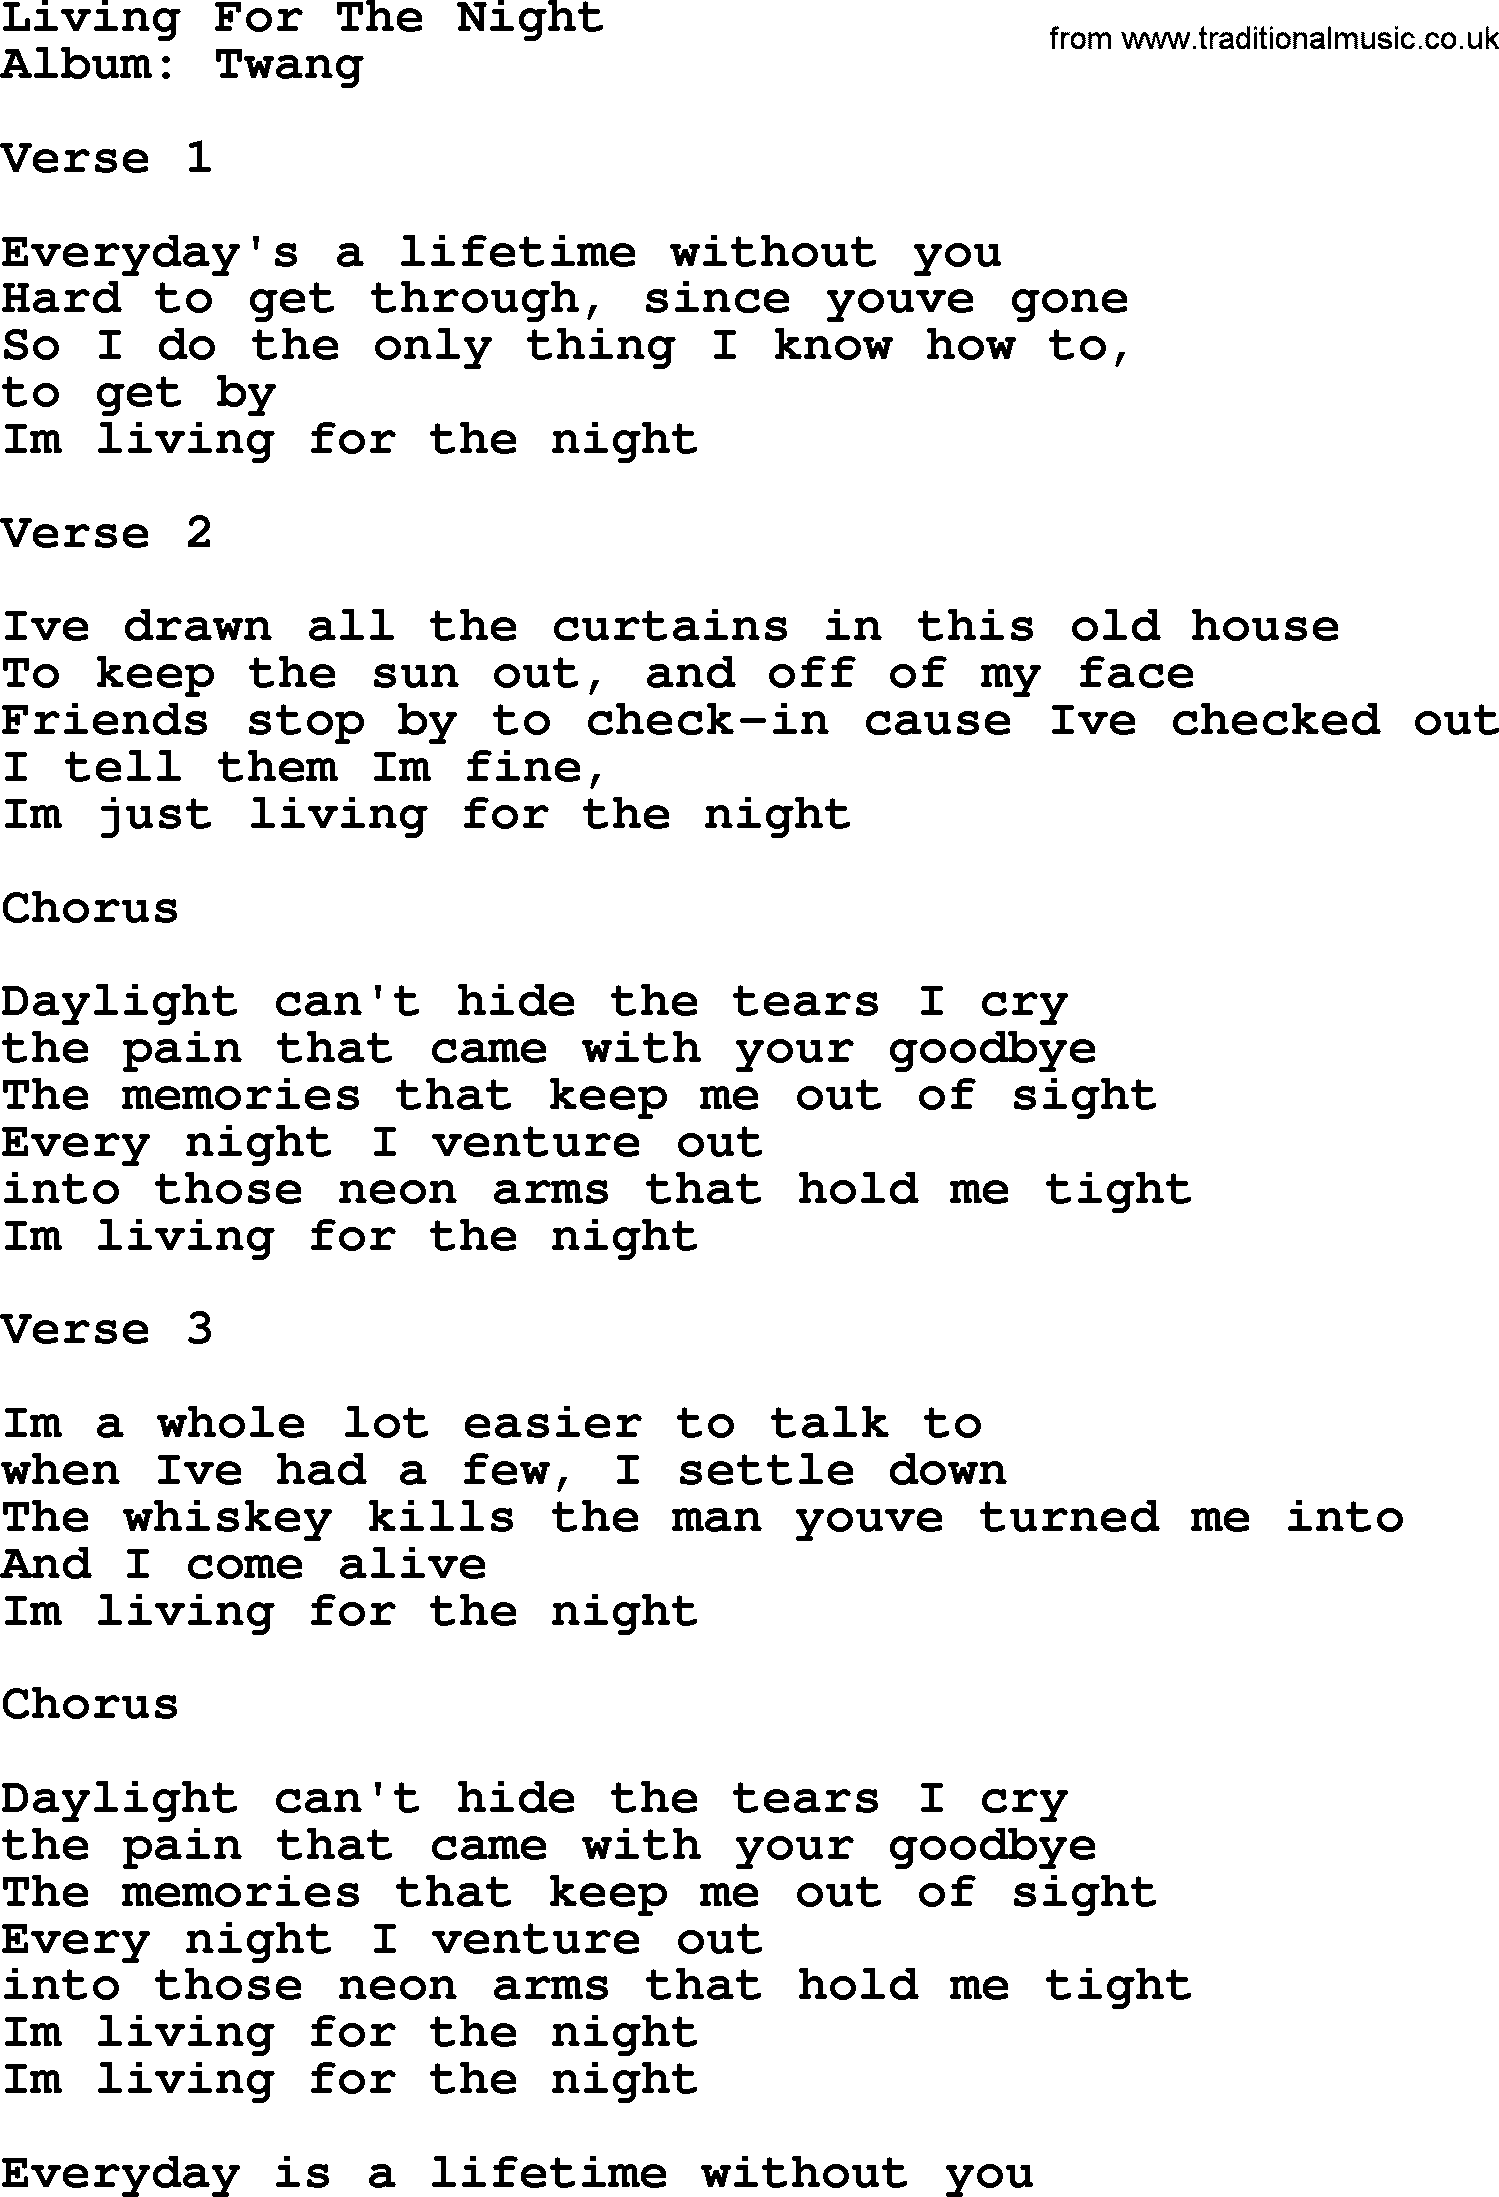 George Strait song: Living For The Night, lyrics